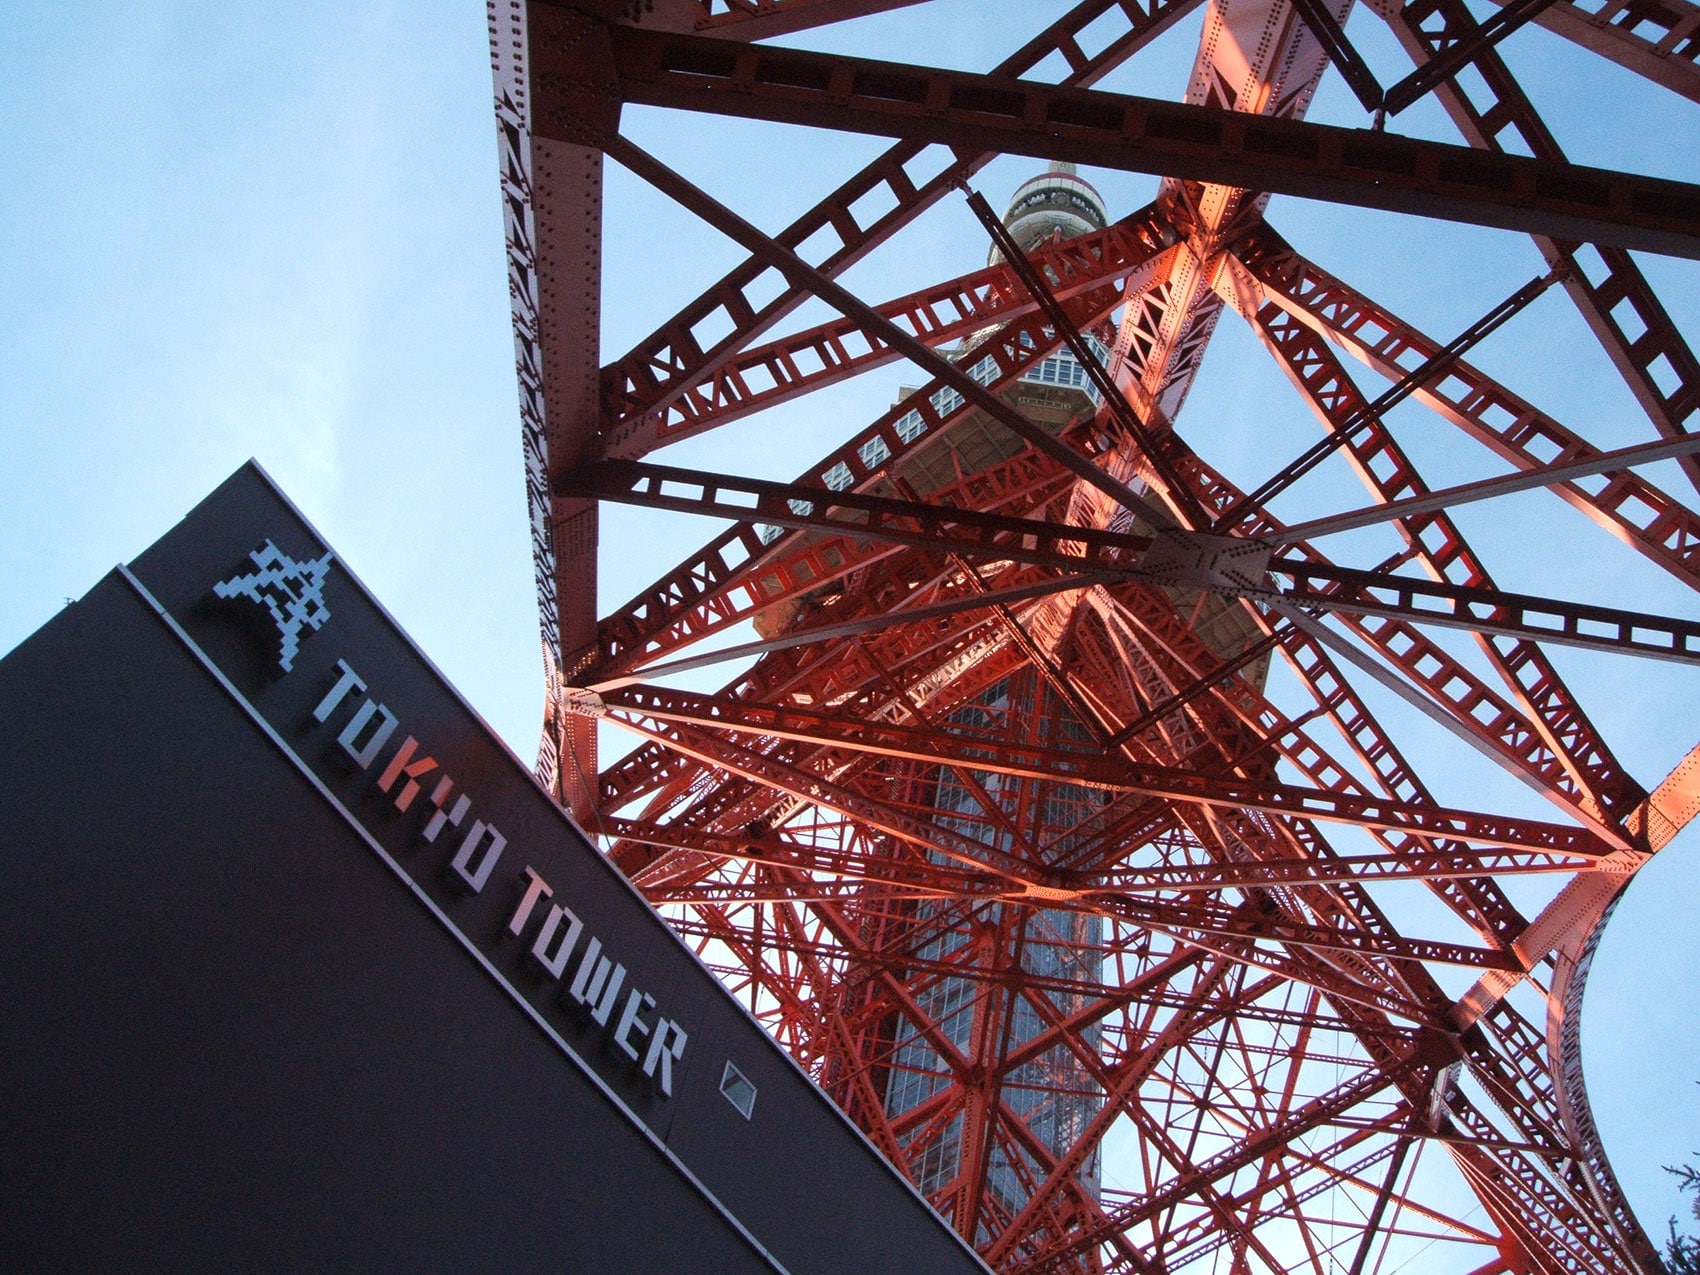 Tokyo Tower, Japan